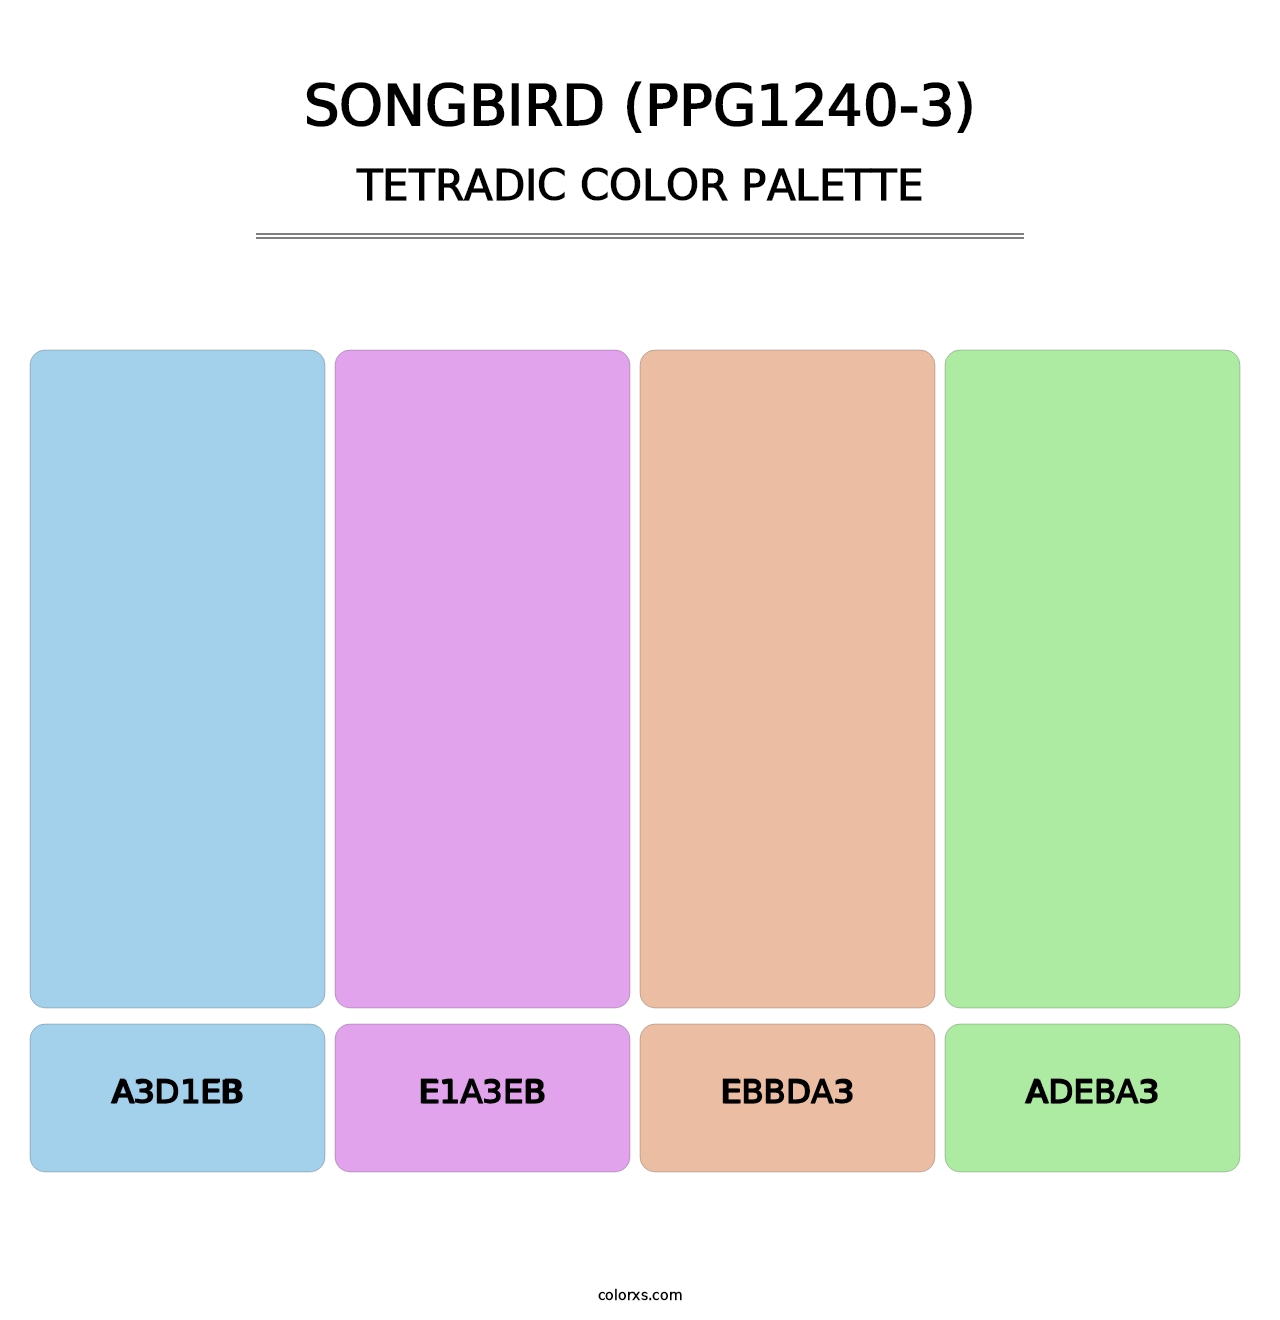 Songbird (PPG1240-3) - Tetradic Color Palette